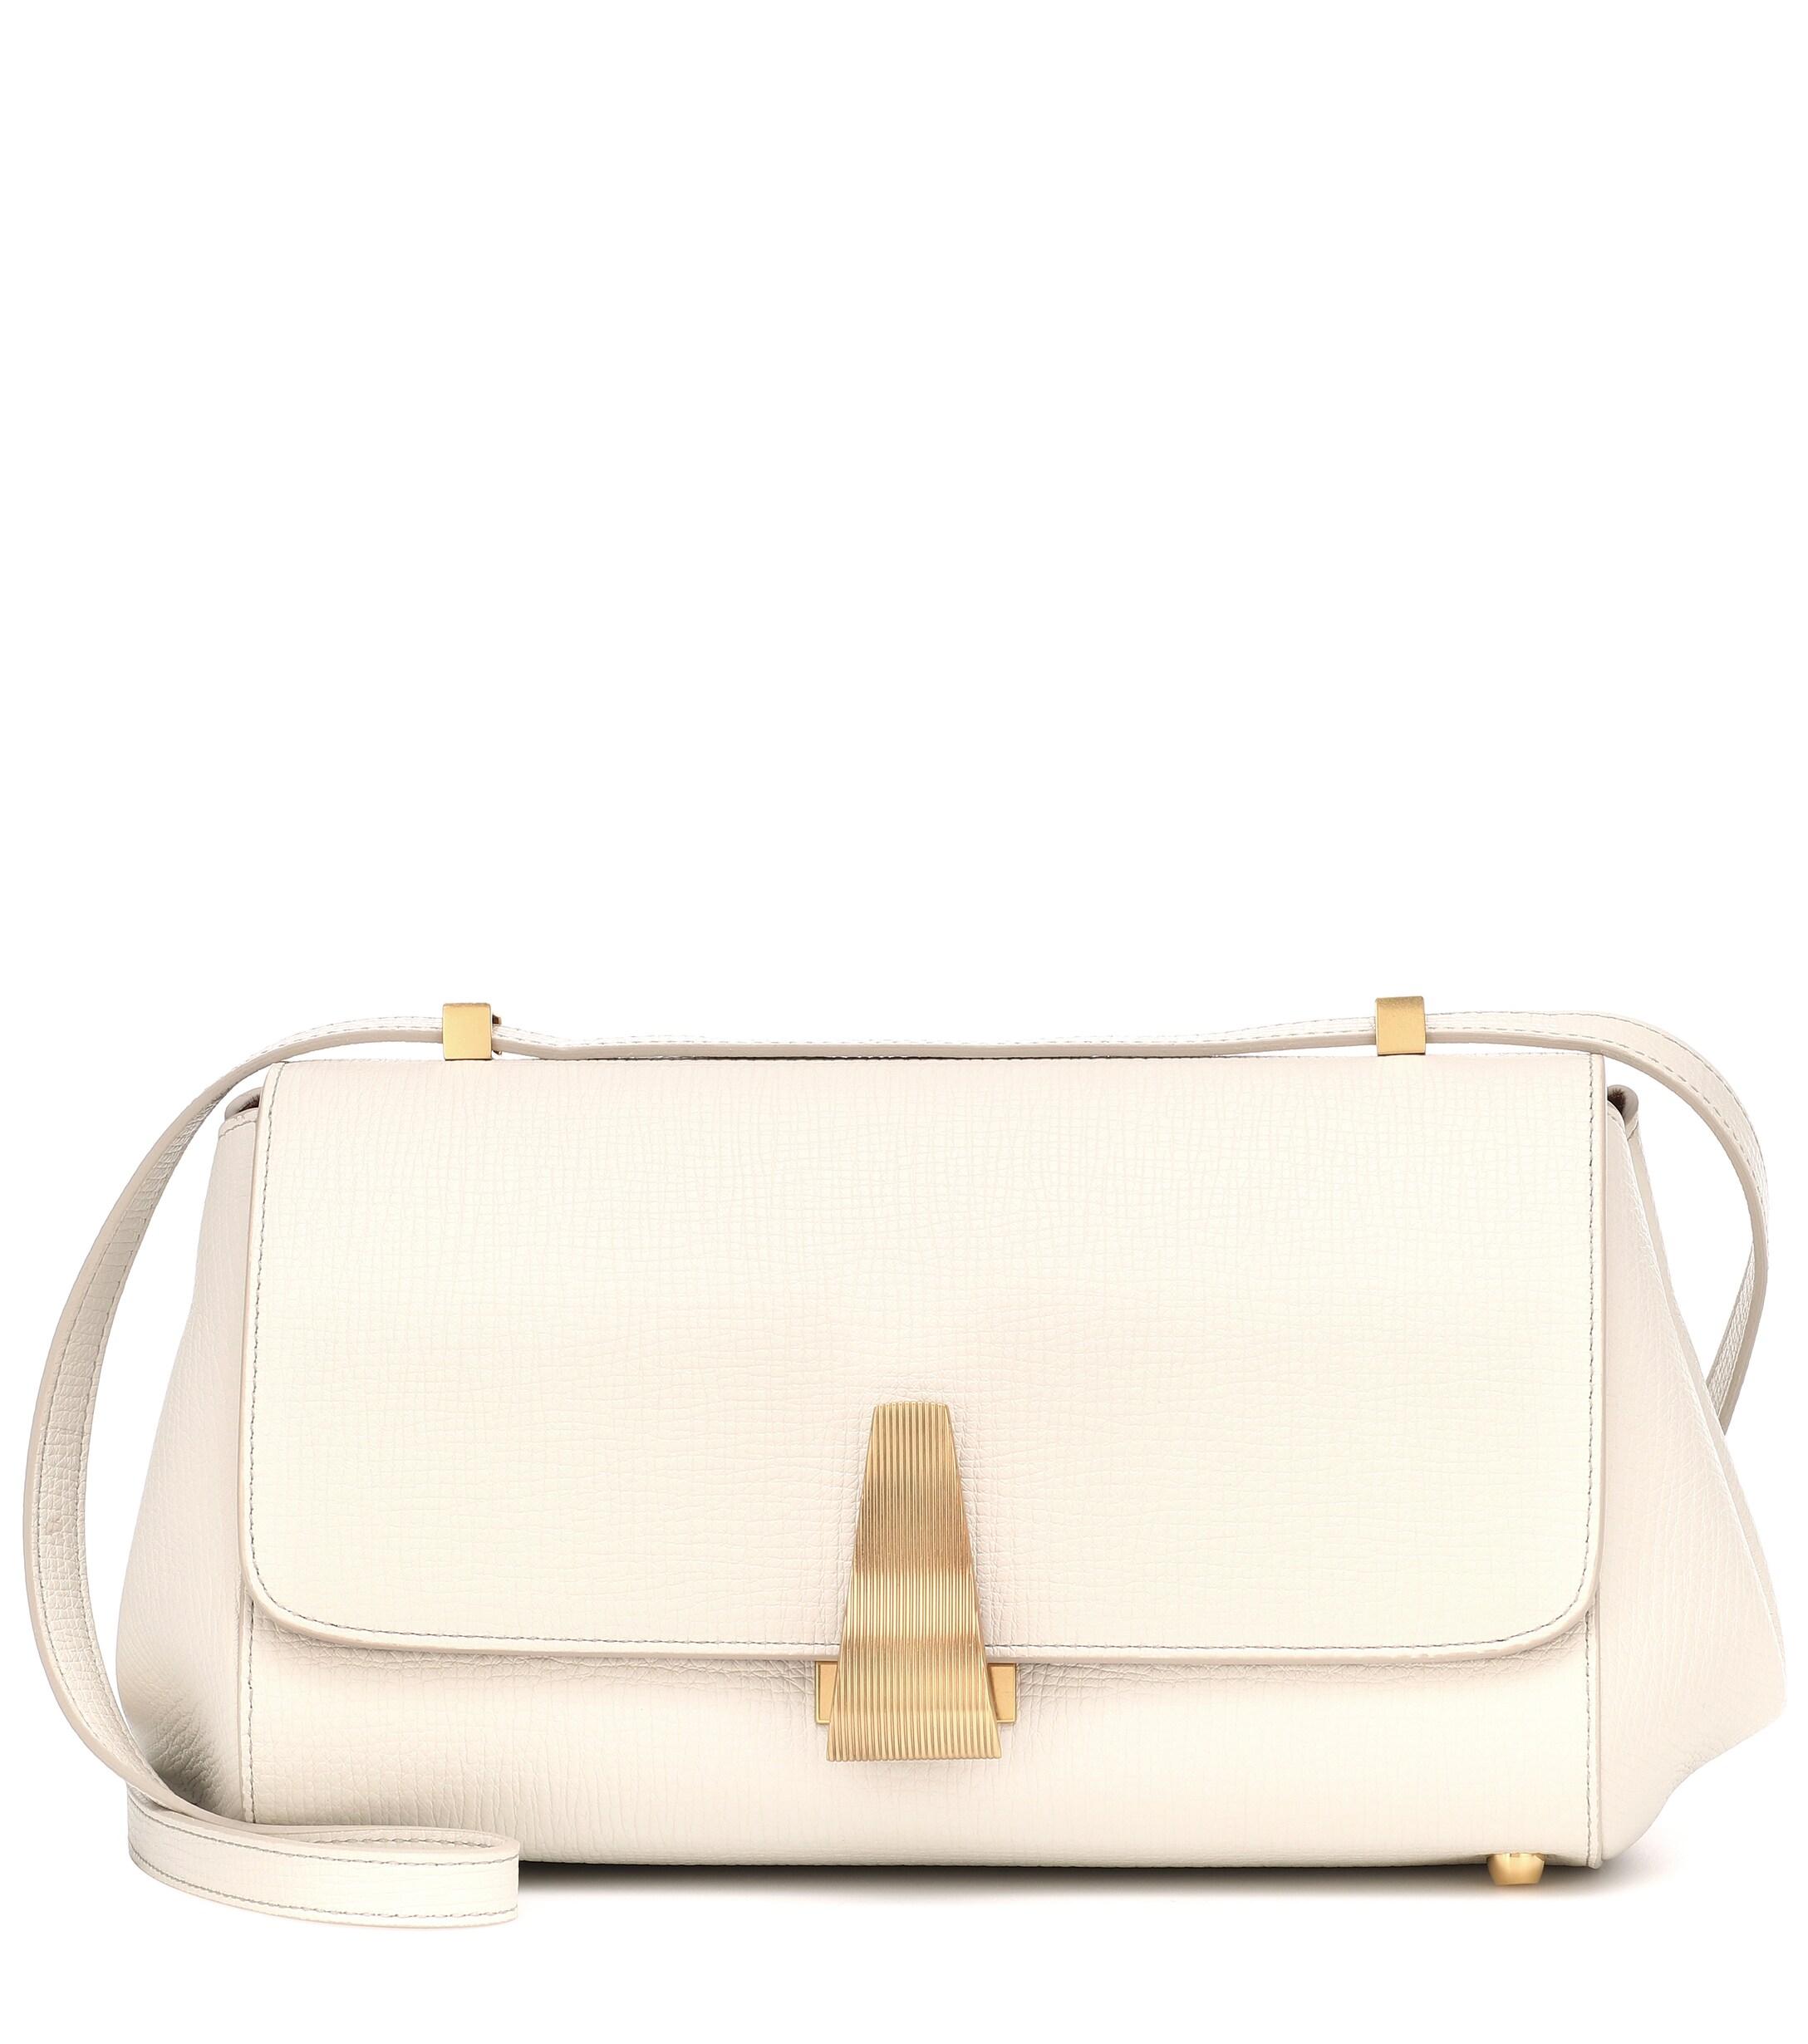 Bottega Veneta Bv Angle Small Leather Shoulder Bag in White - Lyst